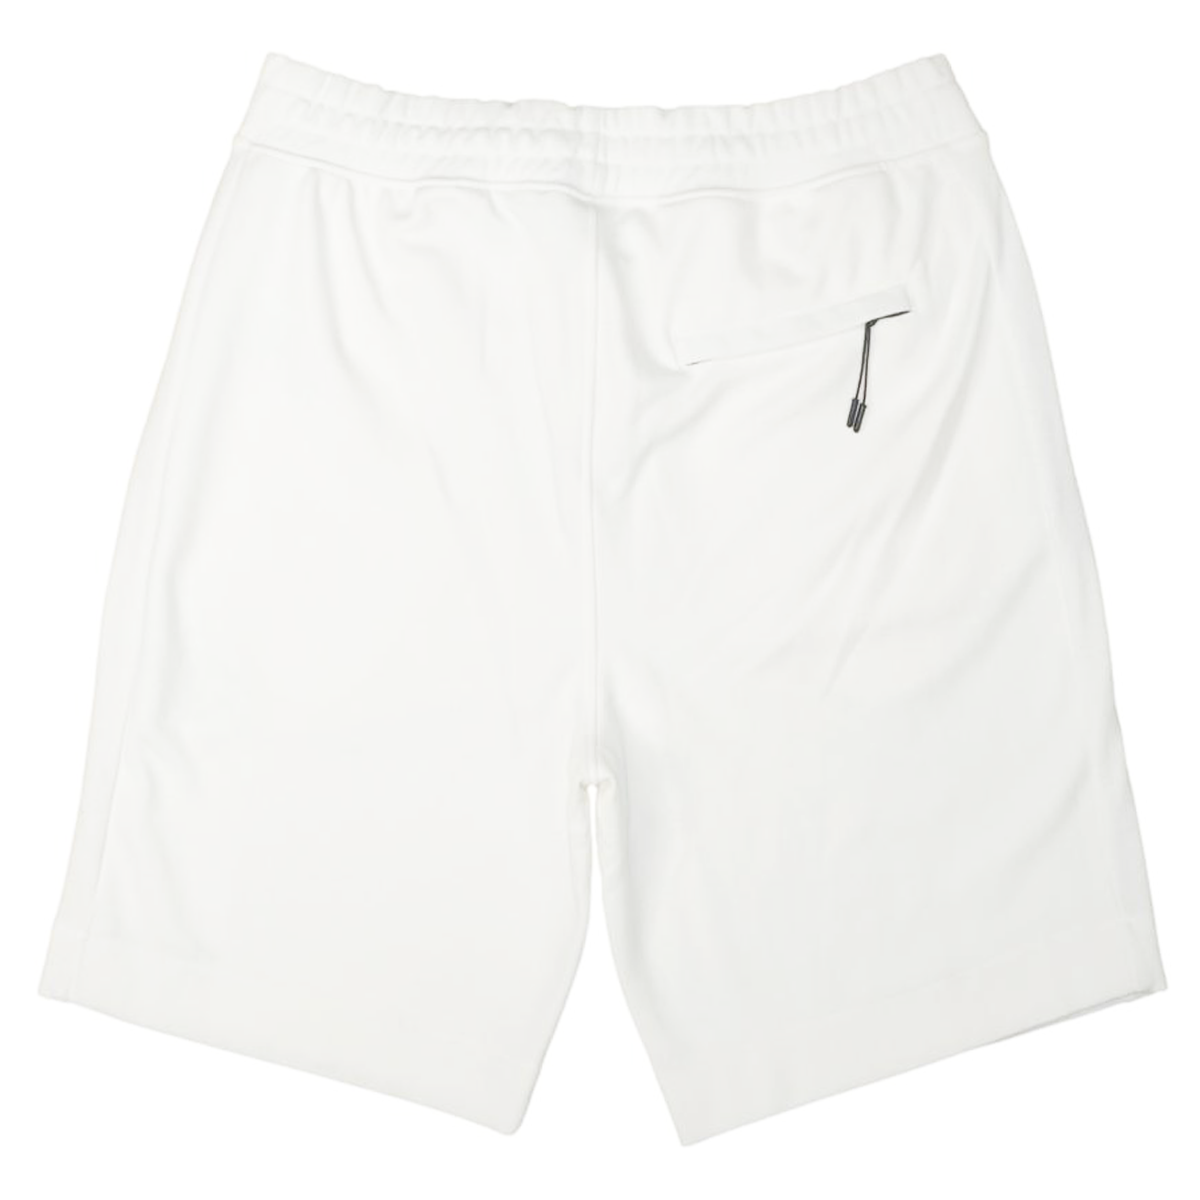 Velocita Shorts (White/Green/Marble) /D17